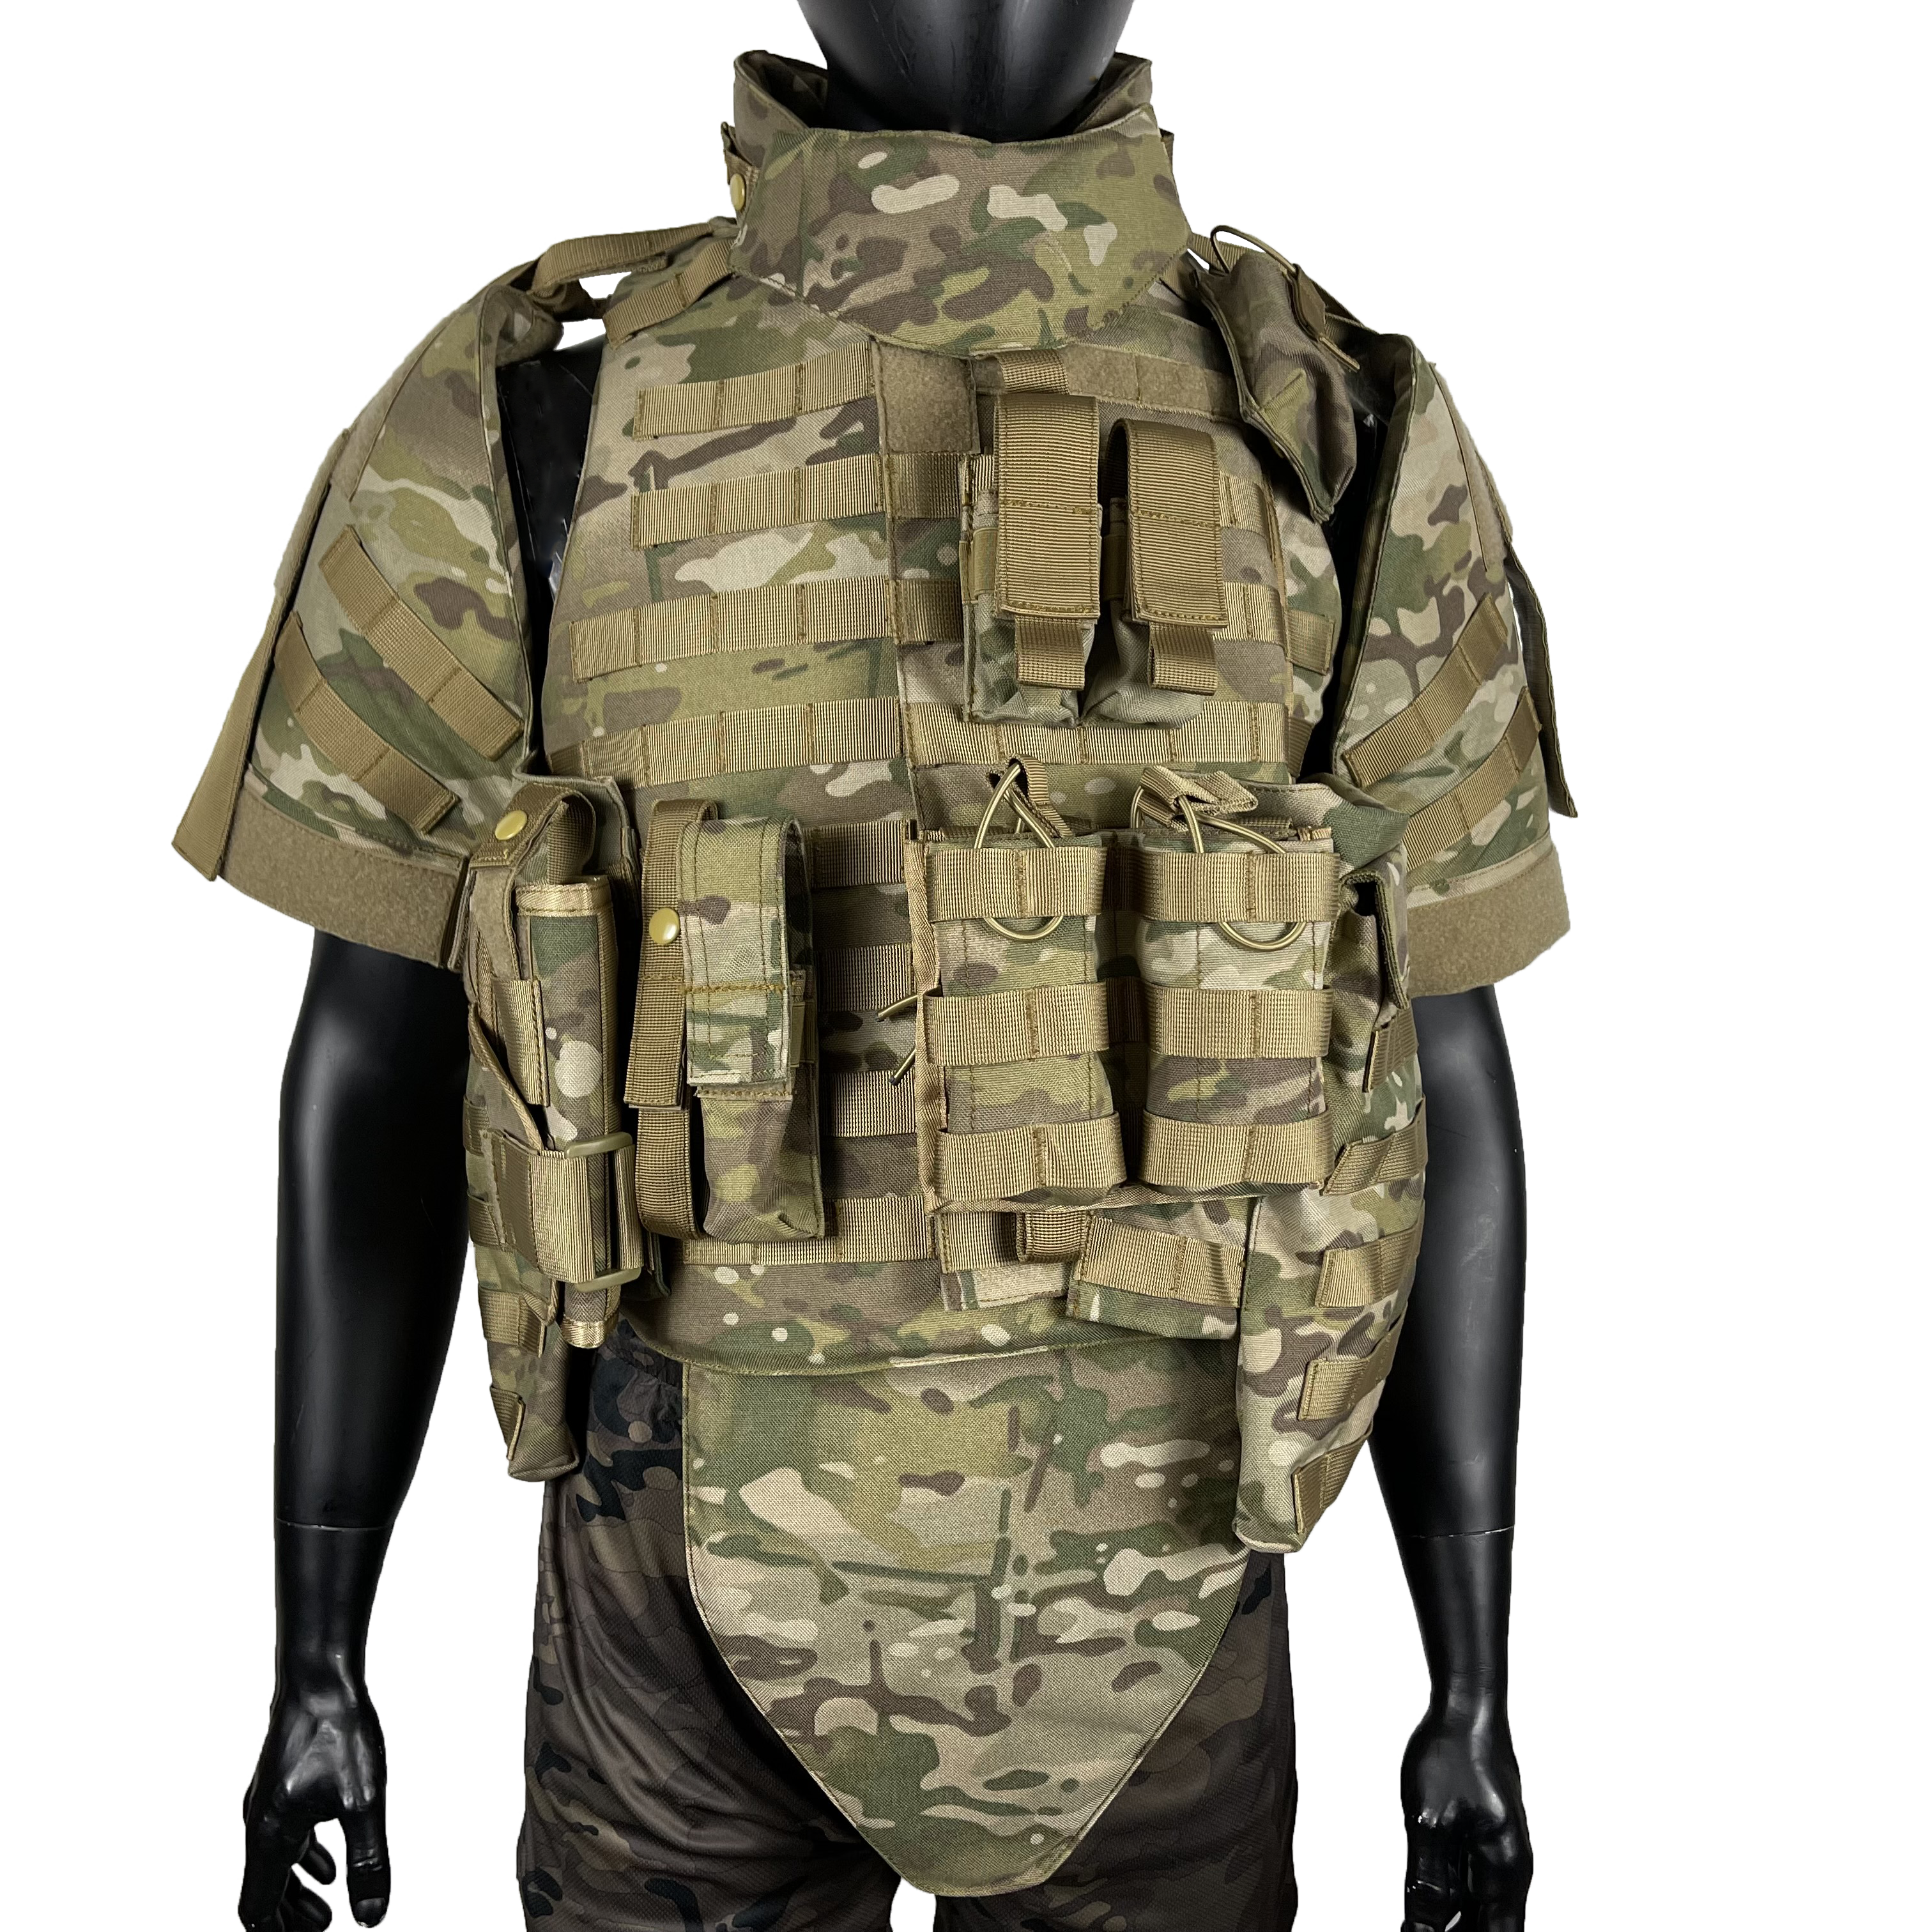 Bulletproof Vest Body Armor Vest Tactical Military Gear Level 3 Protection